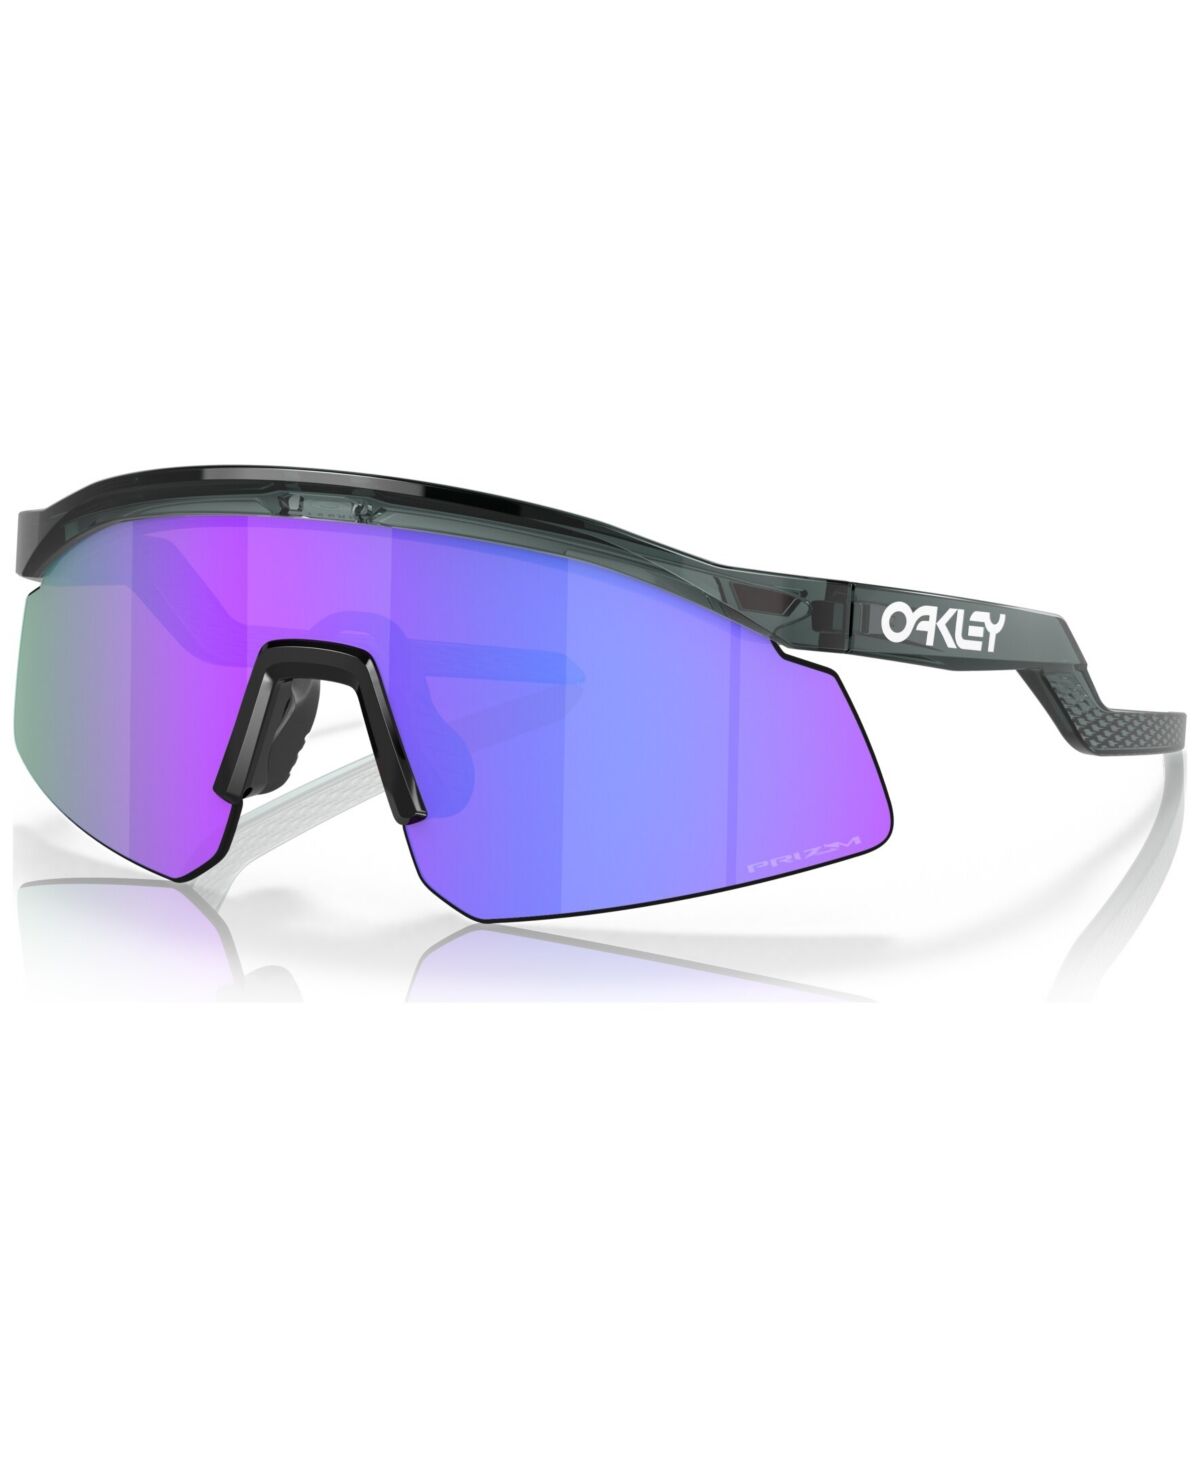 Oakley Men's Sunglasses, OO9229-0137 - Crystal Black